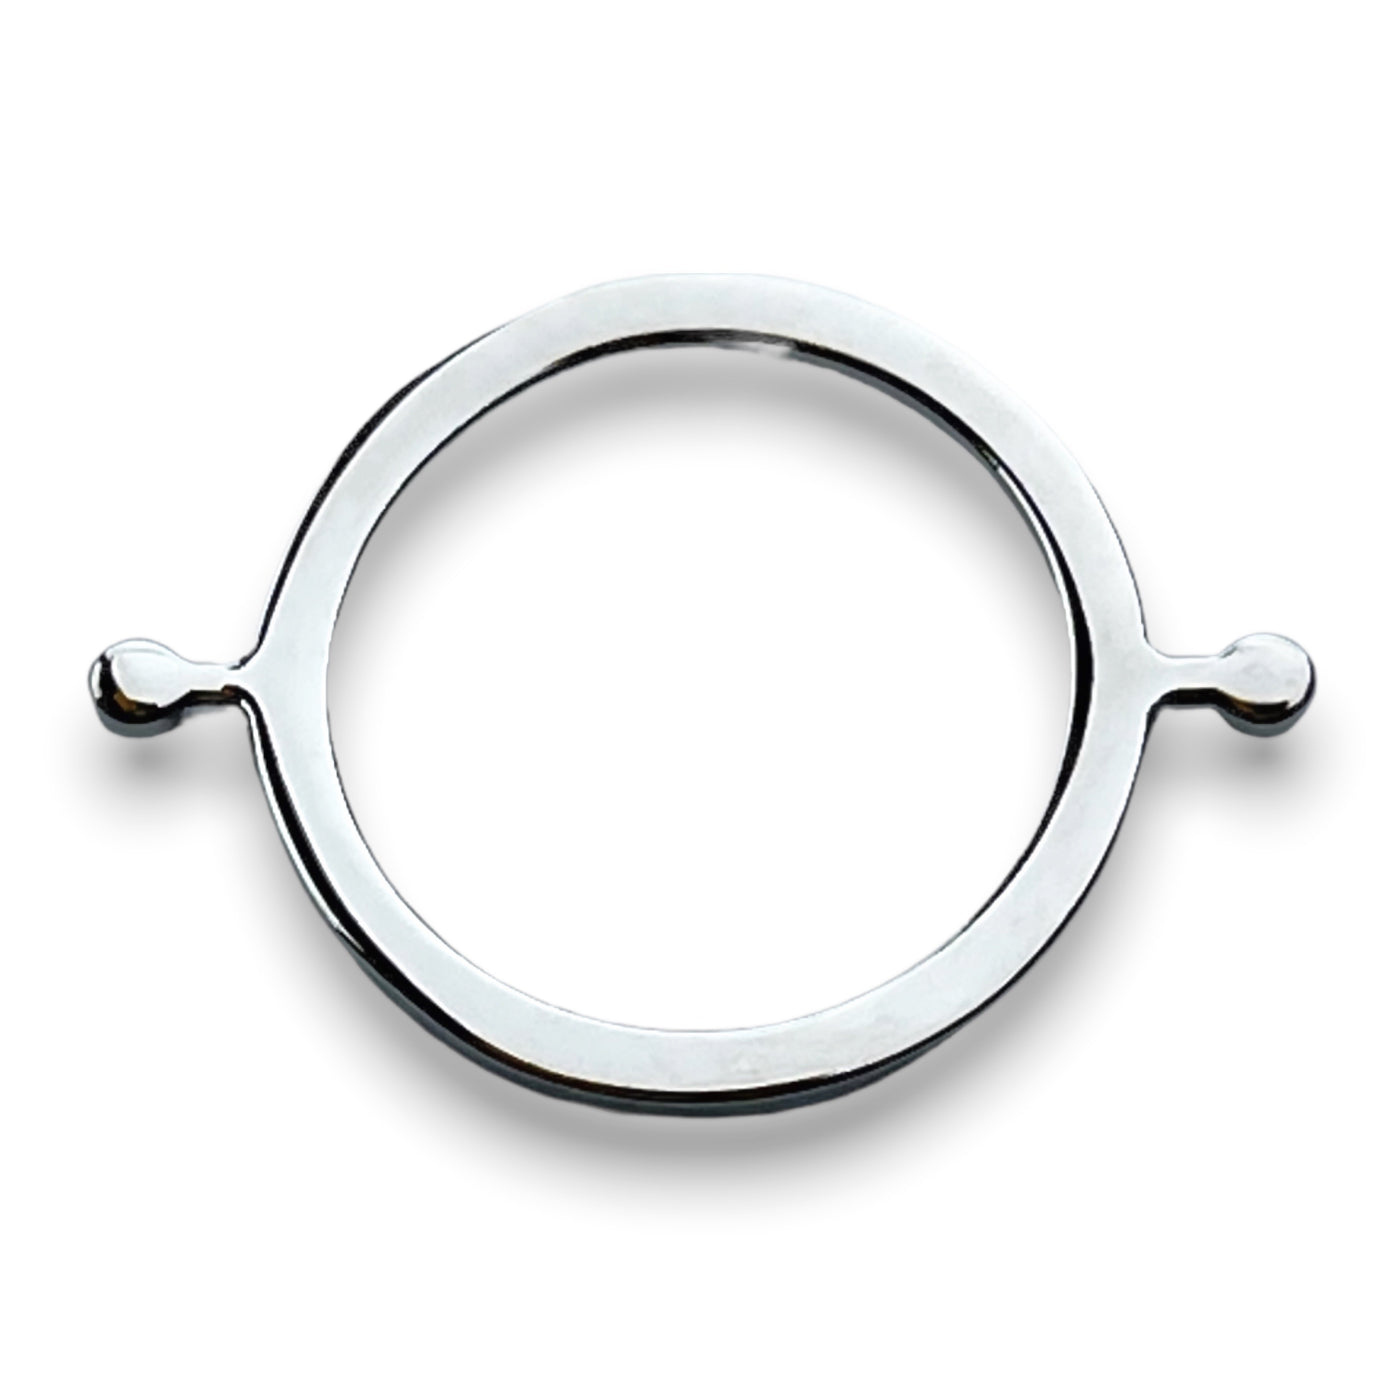 Circle-Shaped Open Element